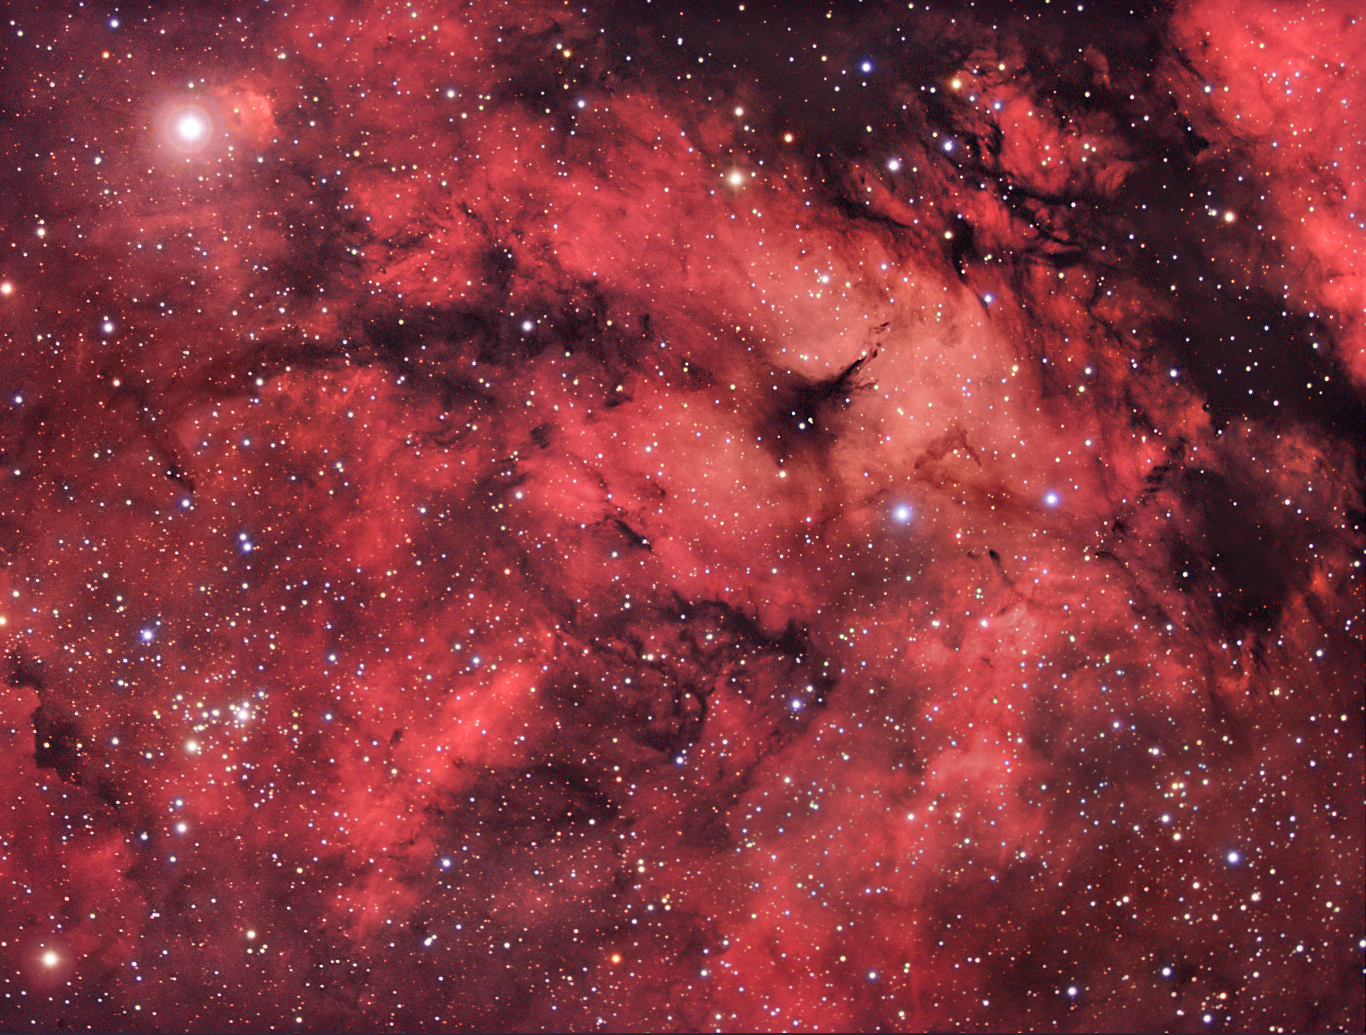 APOD: 2004 July 28 - A Cygnus Star Field